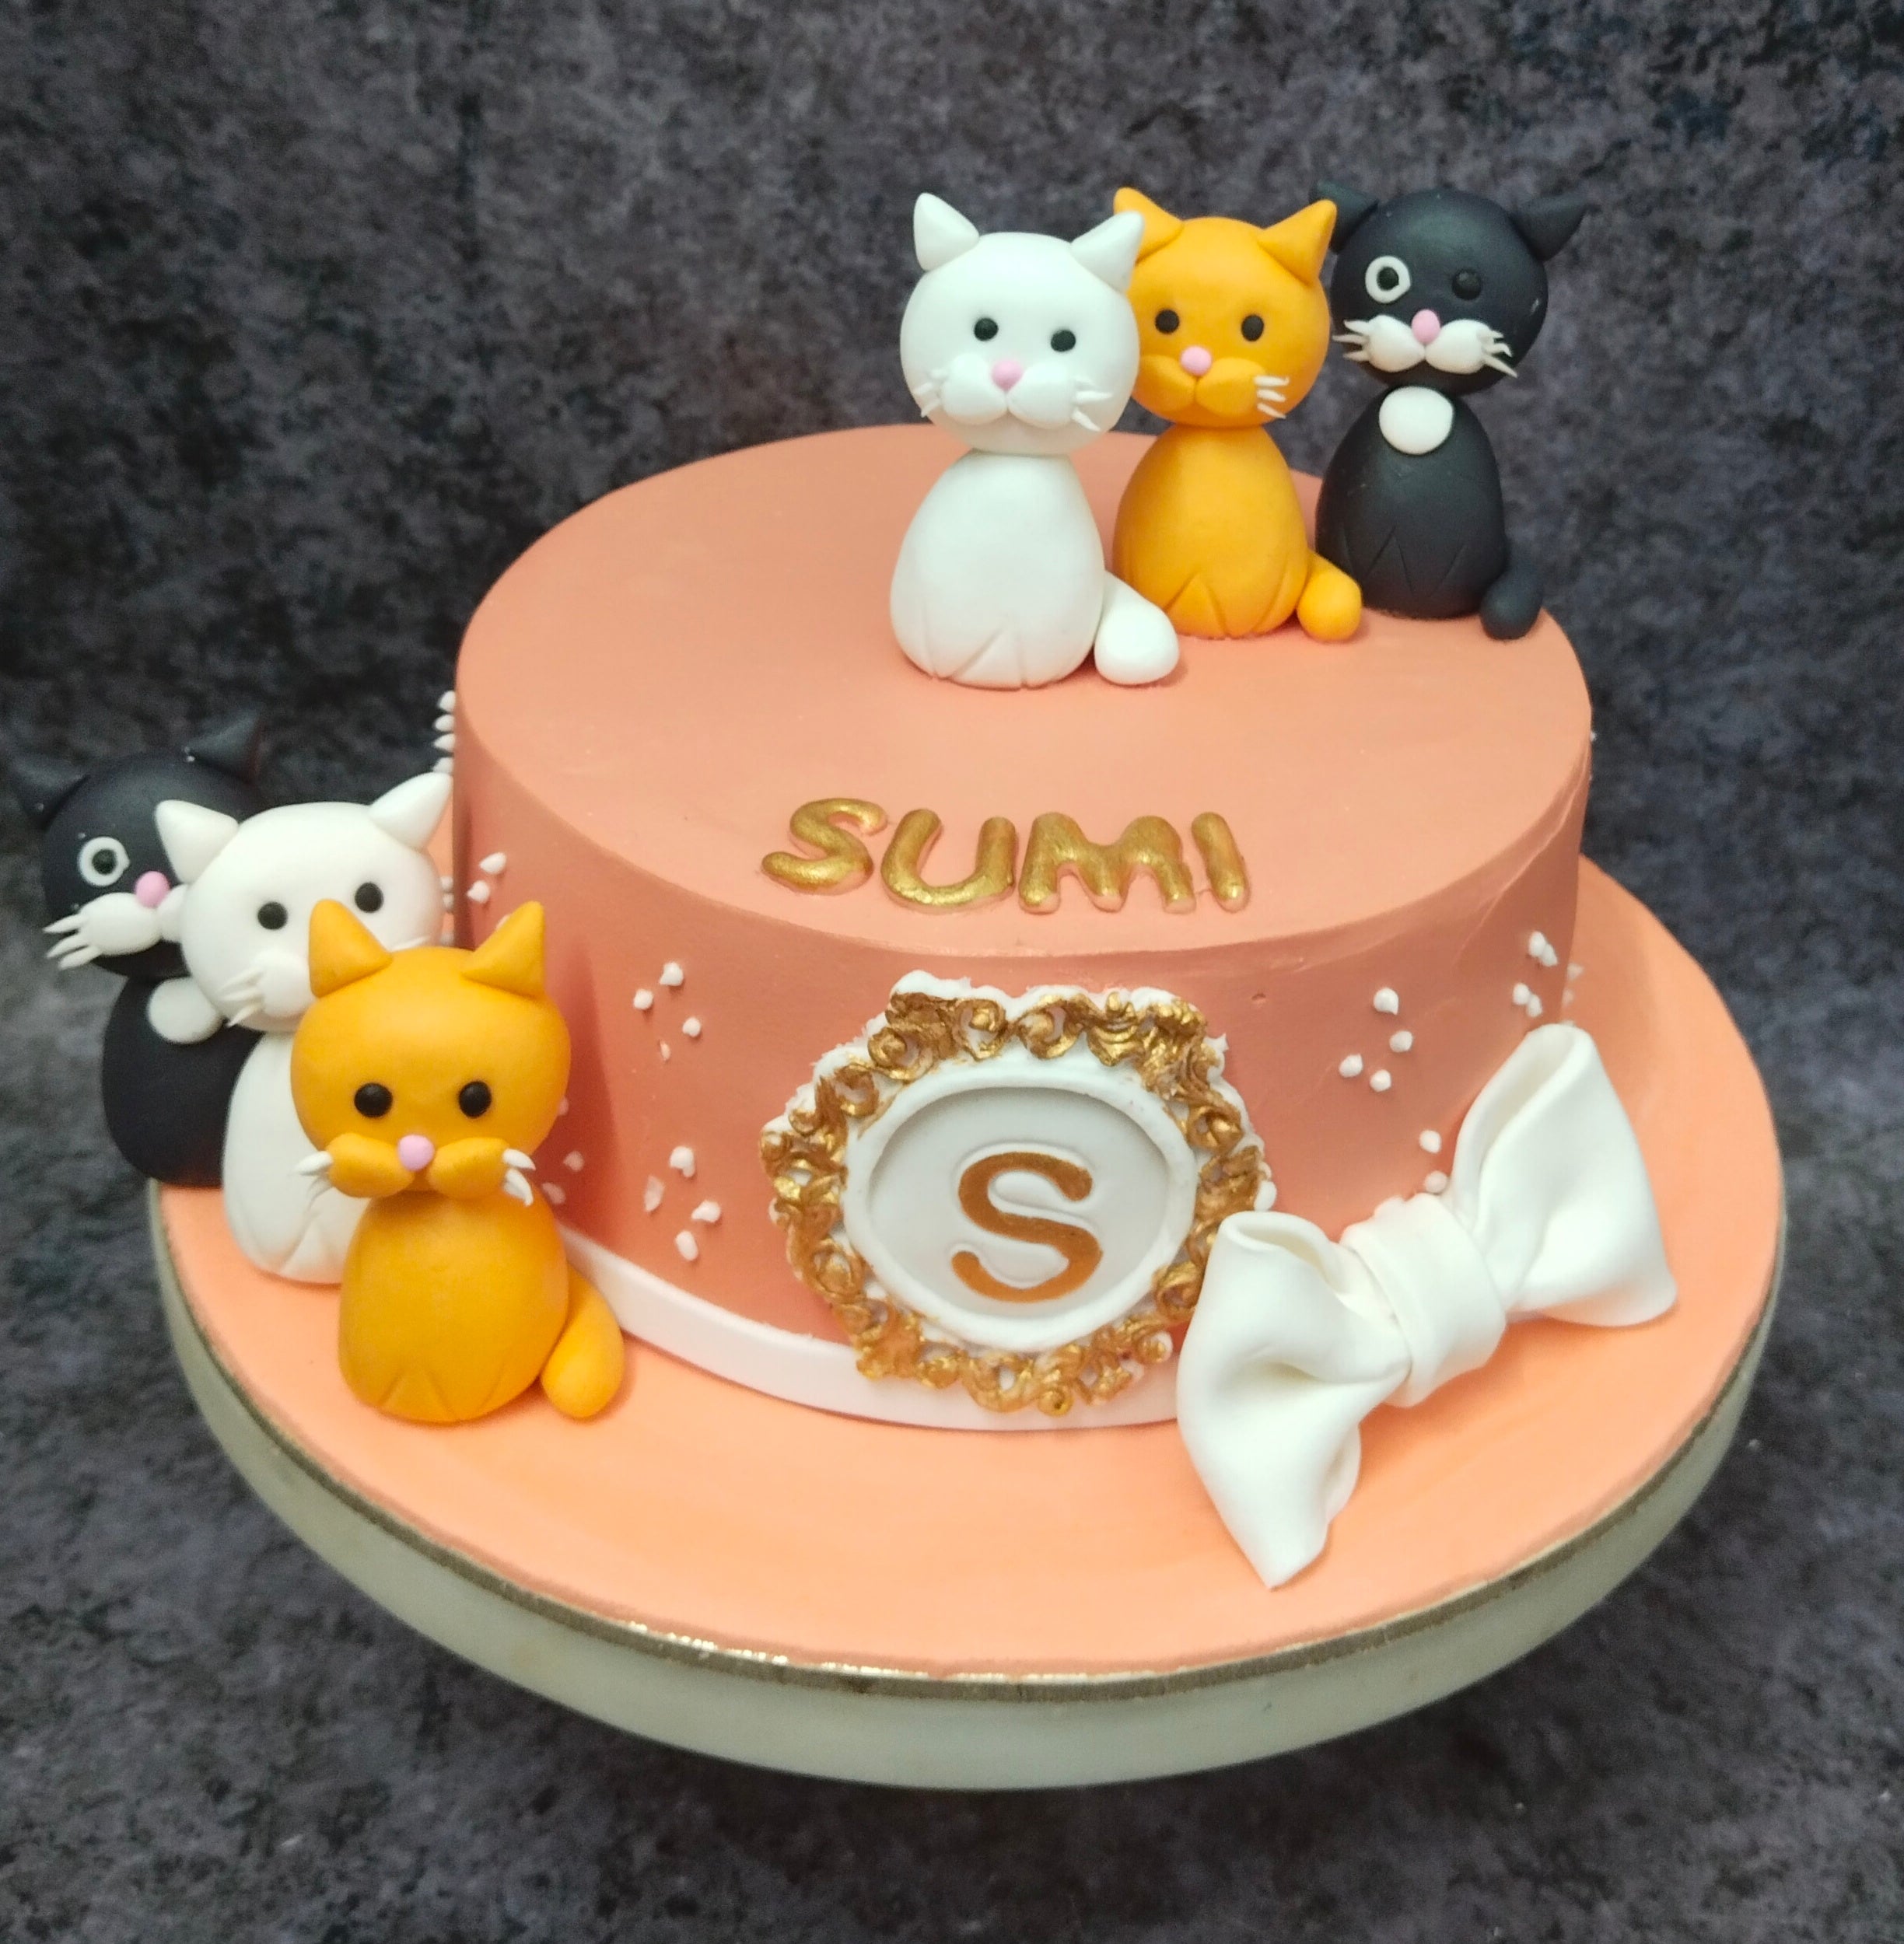 homemade birthday cakes | eBay